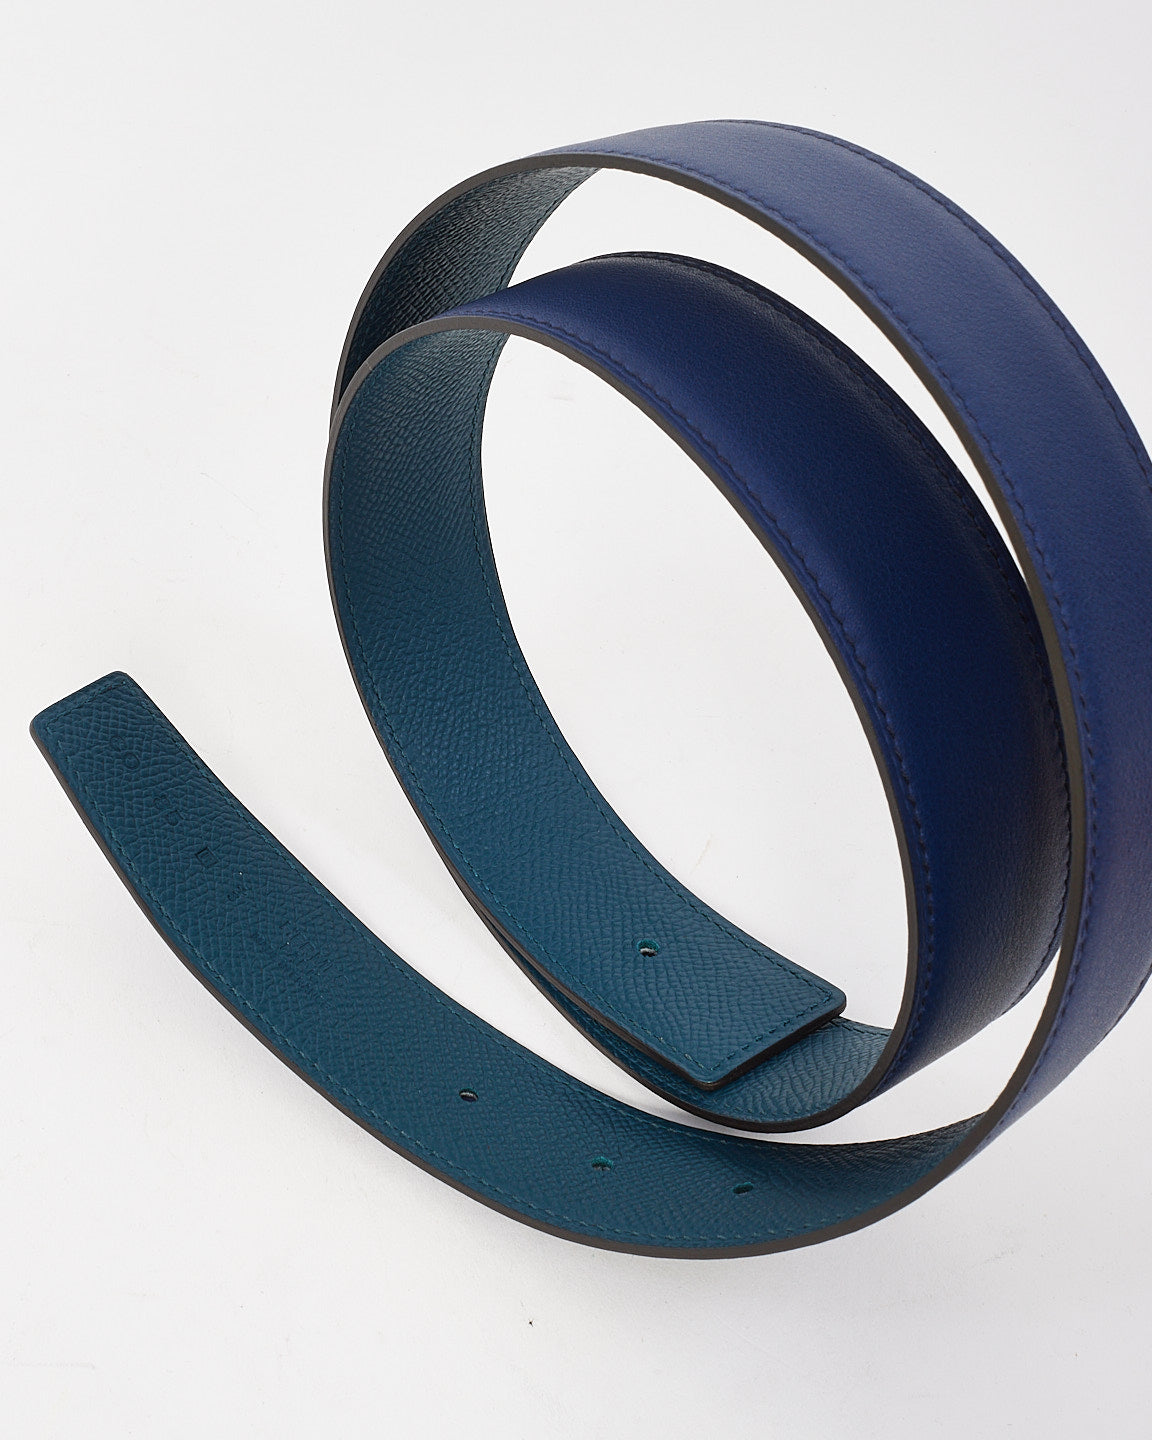 Hermès Blue Leather Reversible Belt - No Buckle 85